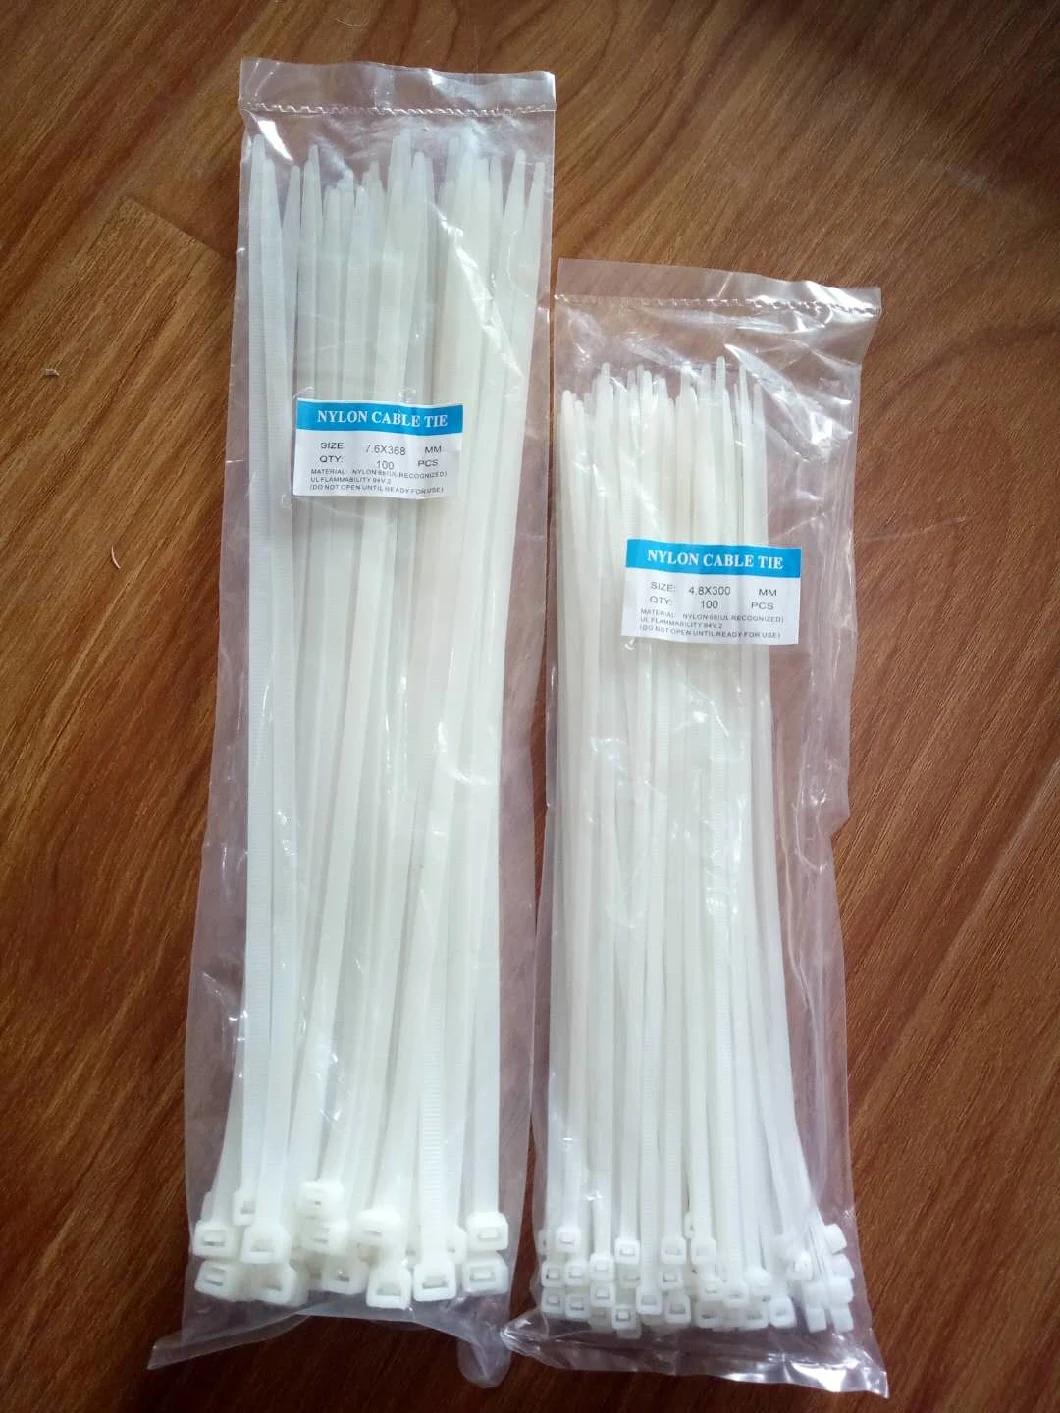 UV Resistant Self Locking Nylon Cable Ties (100-pack)